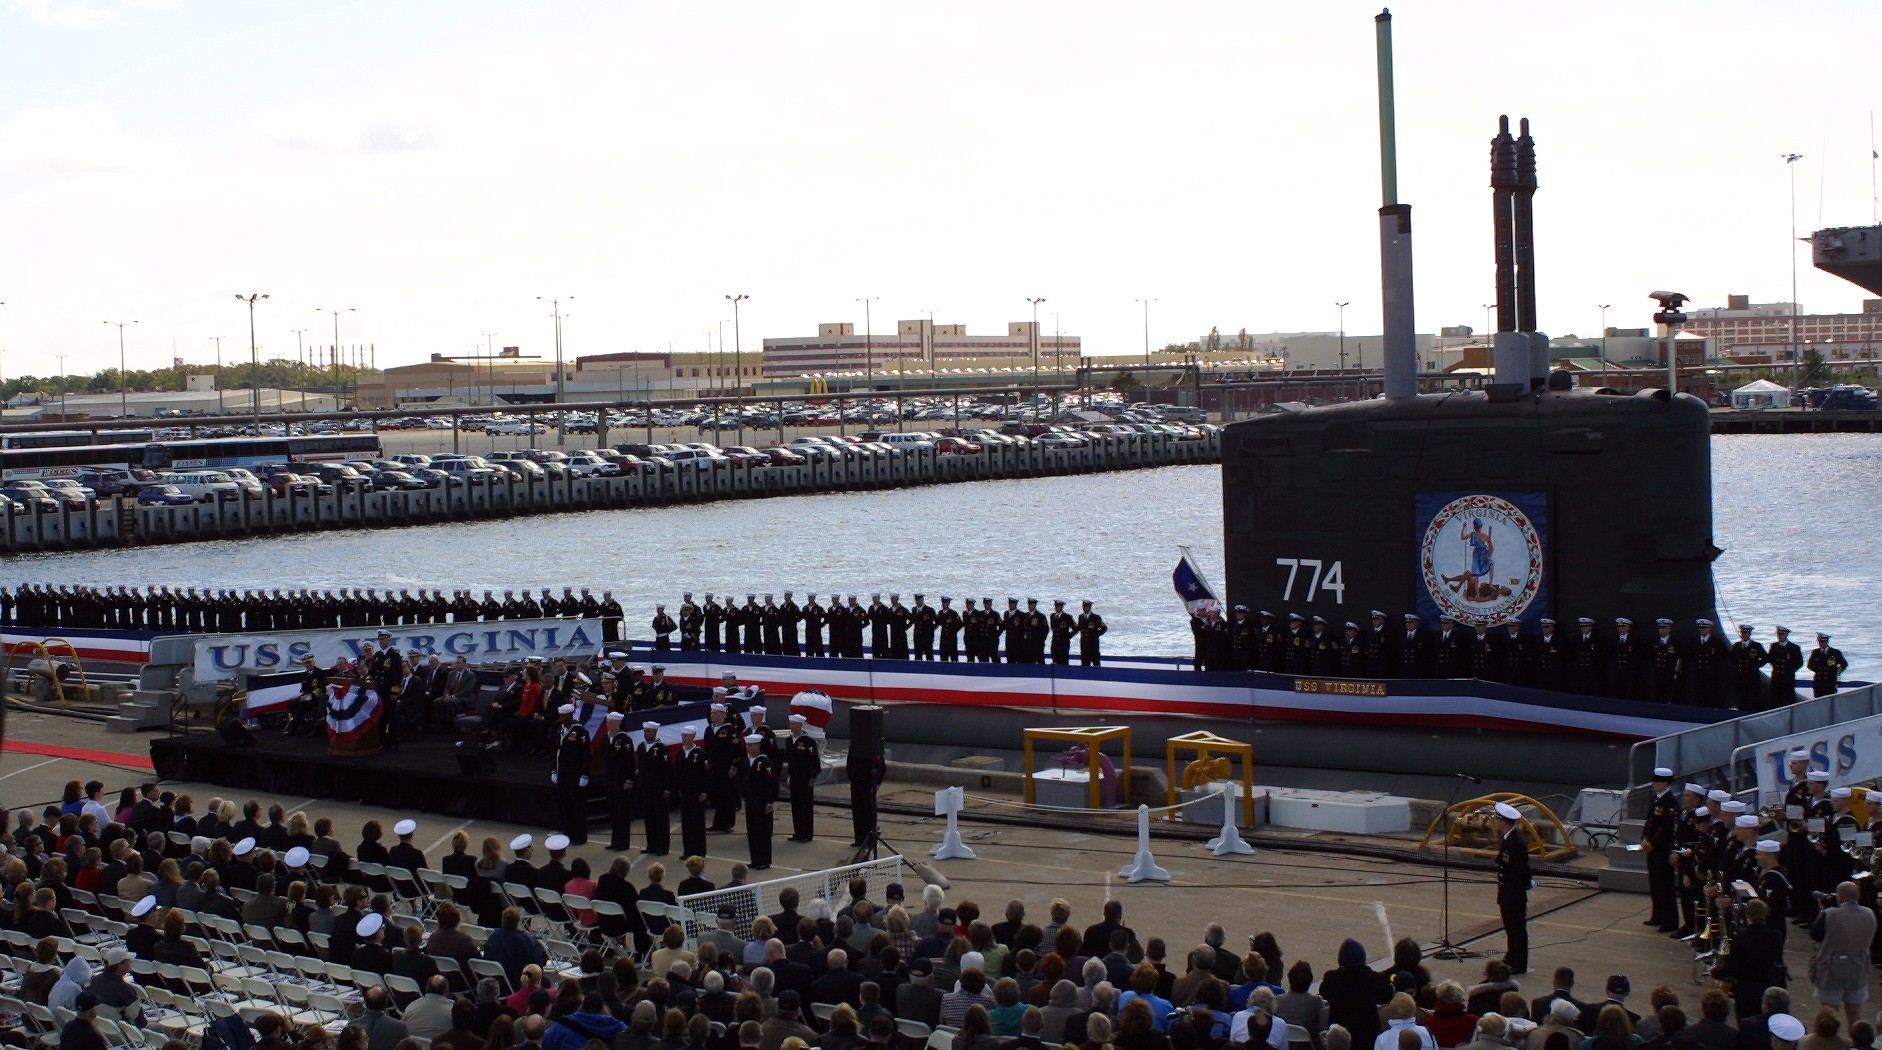 ssn-774 uss virginia attack submarine navy 2004 28 commissioning ceremony naval station norfolk virginia